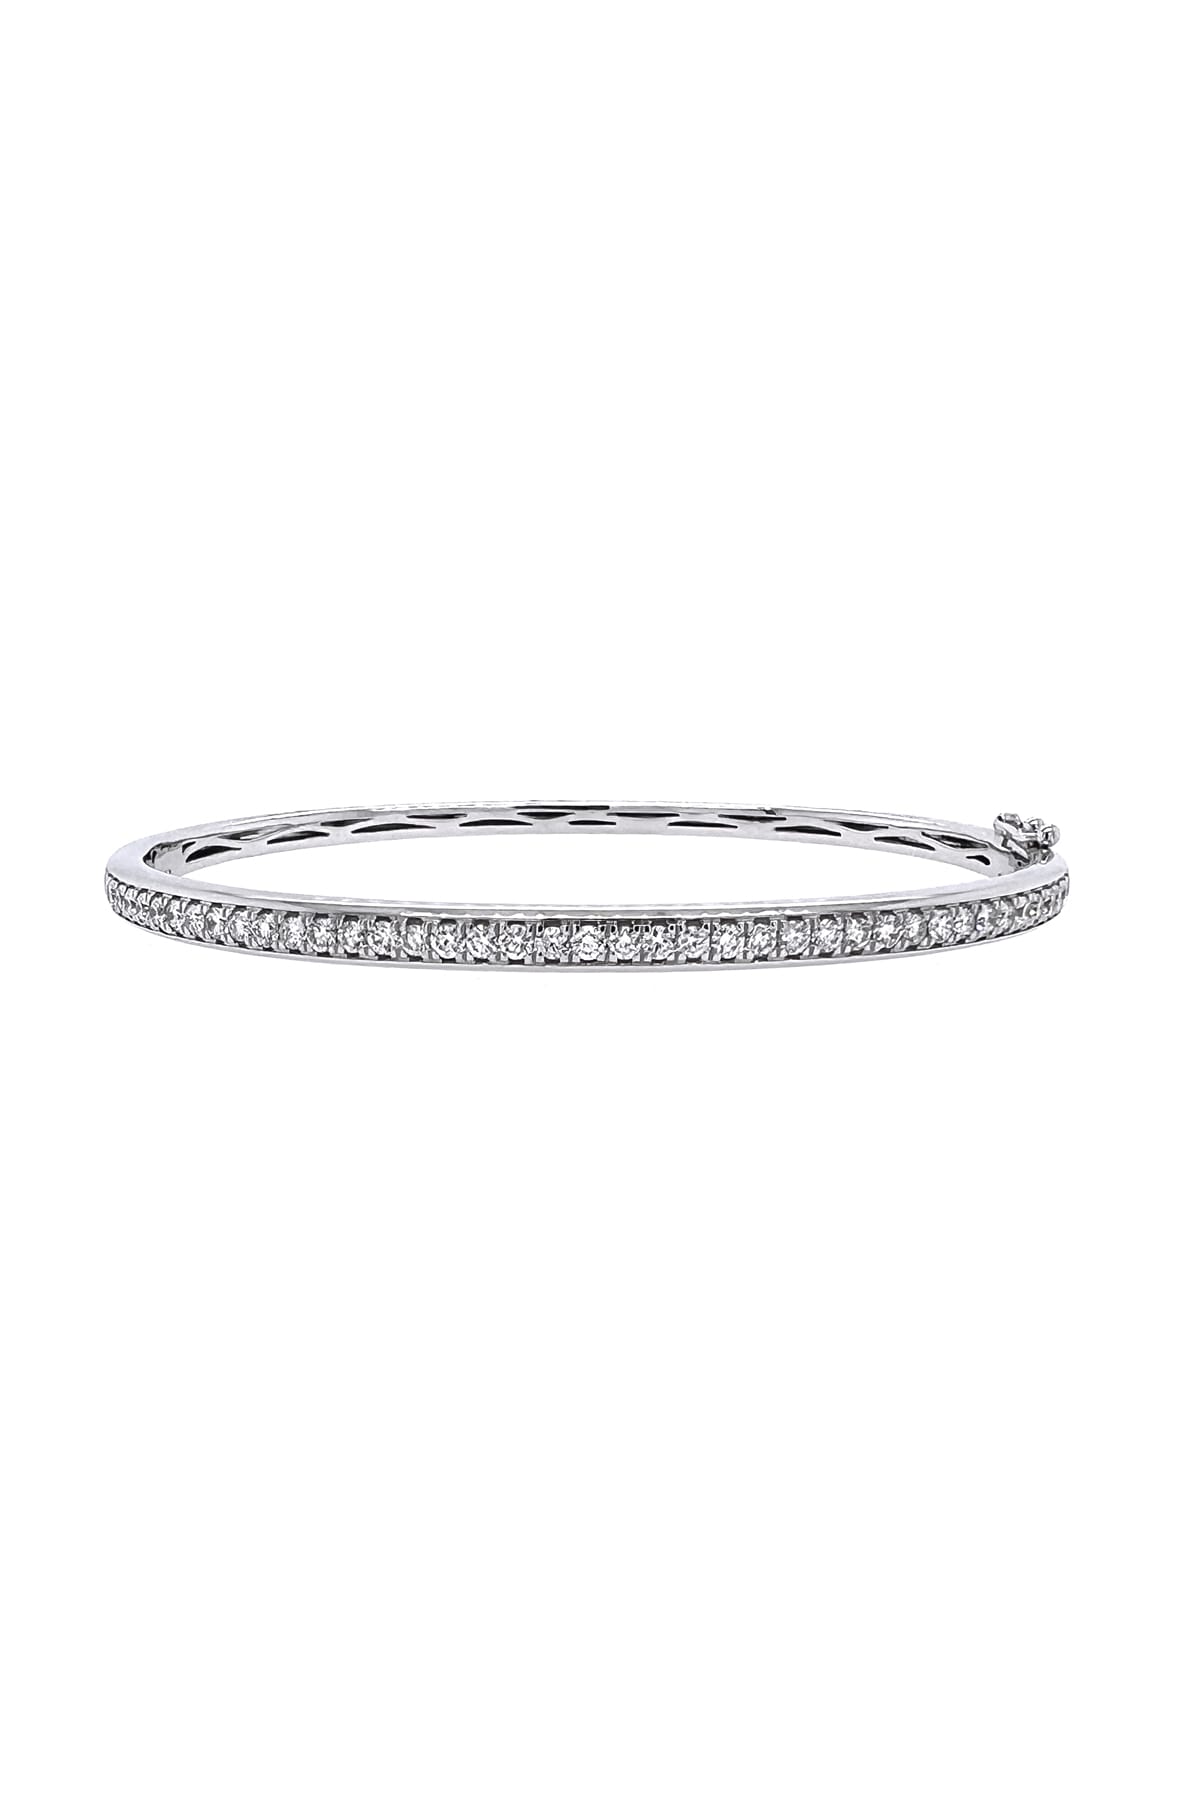 White Gold Oval Hinged Diamond Set Bangle available at LeGassick Diamonds and Jewellery Gold Coast, Australia.